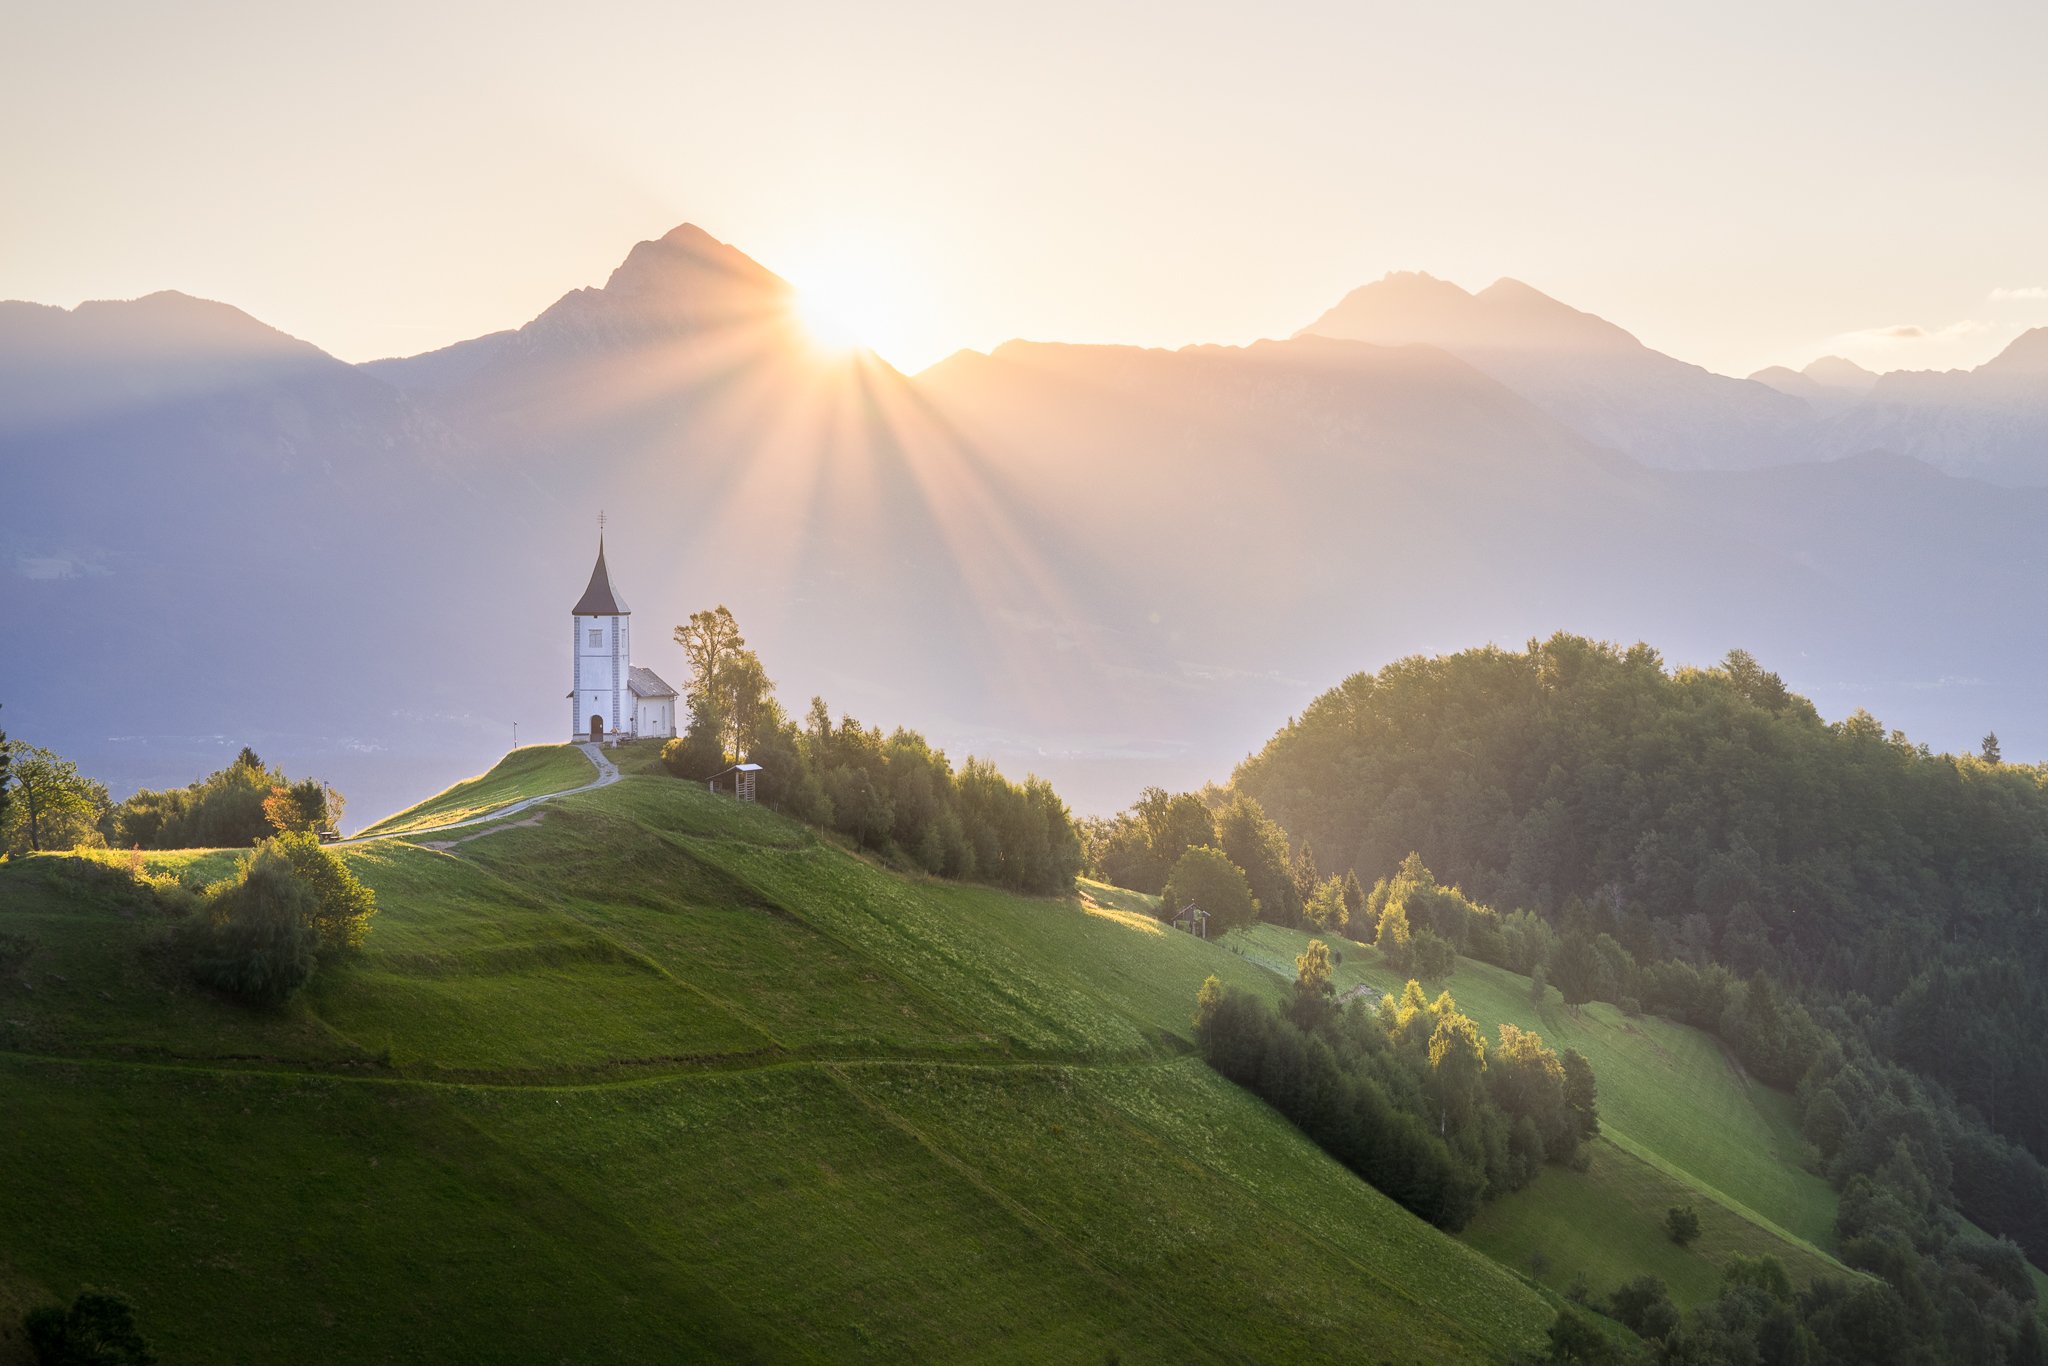 #eurotrip #adventure #travel #slovenia #trip #sunrise #church #alps #mountains #green #wake up #journey #summer, Mая Врънгова